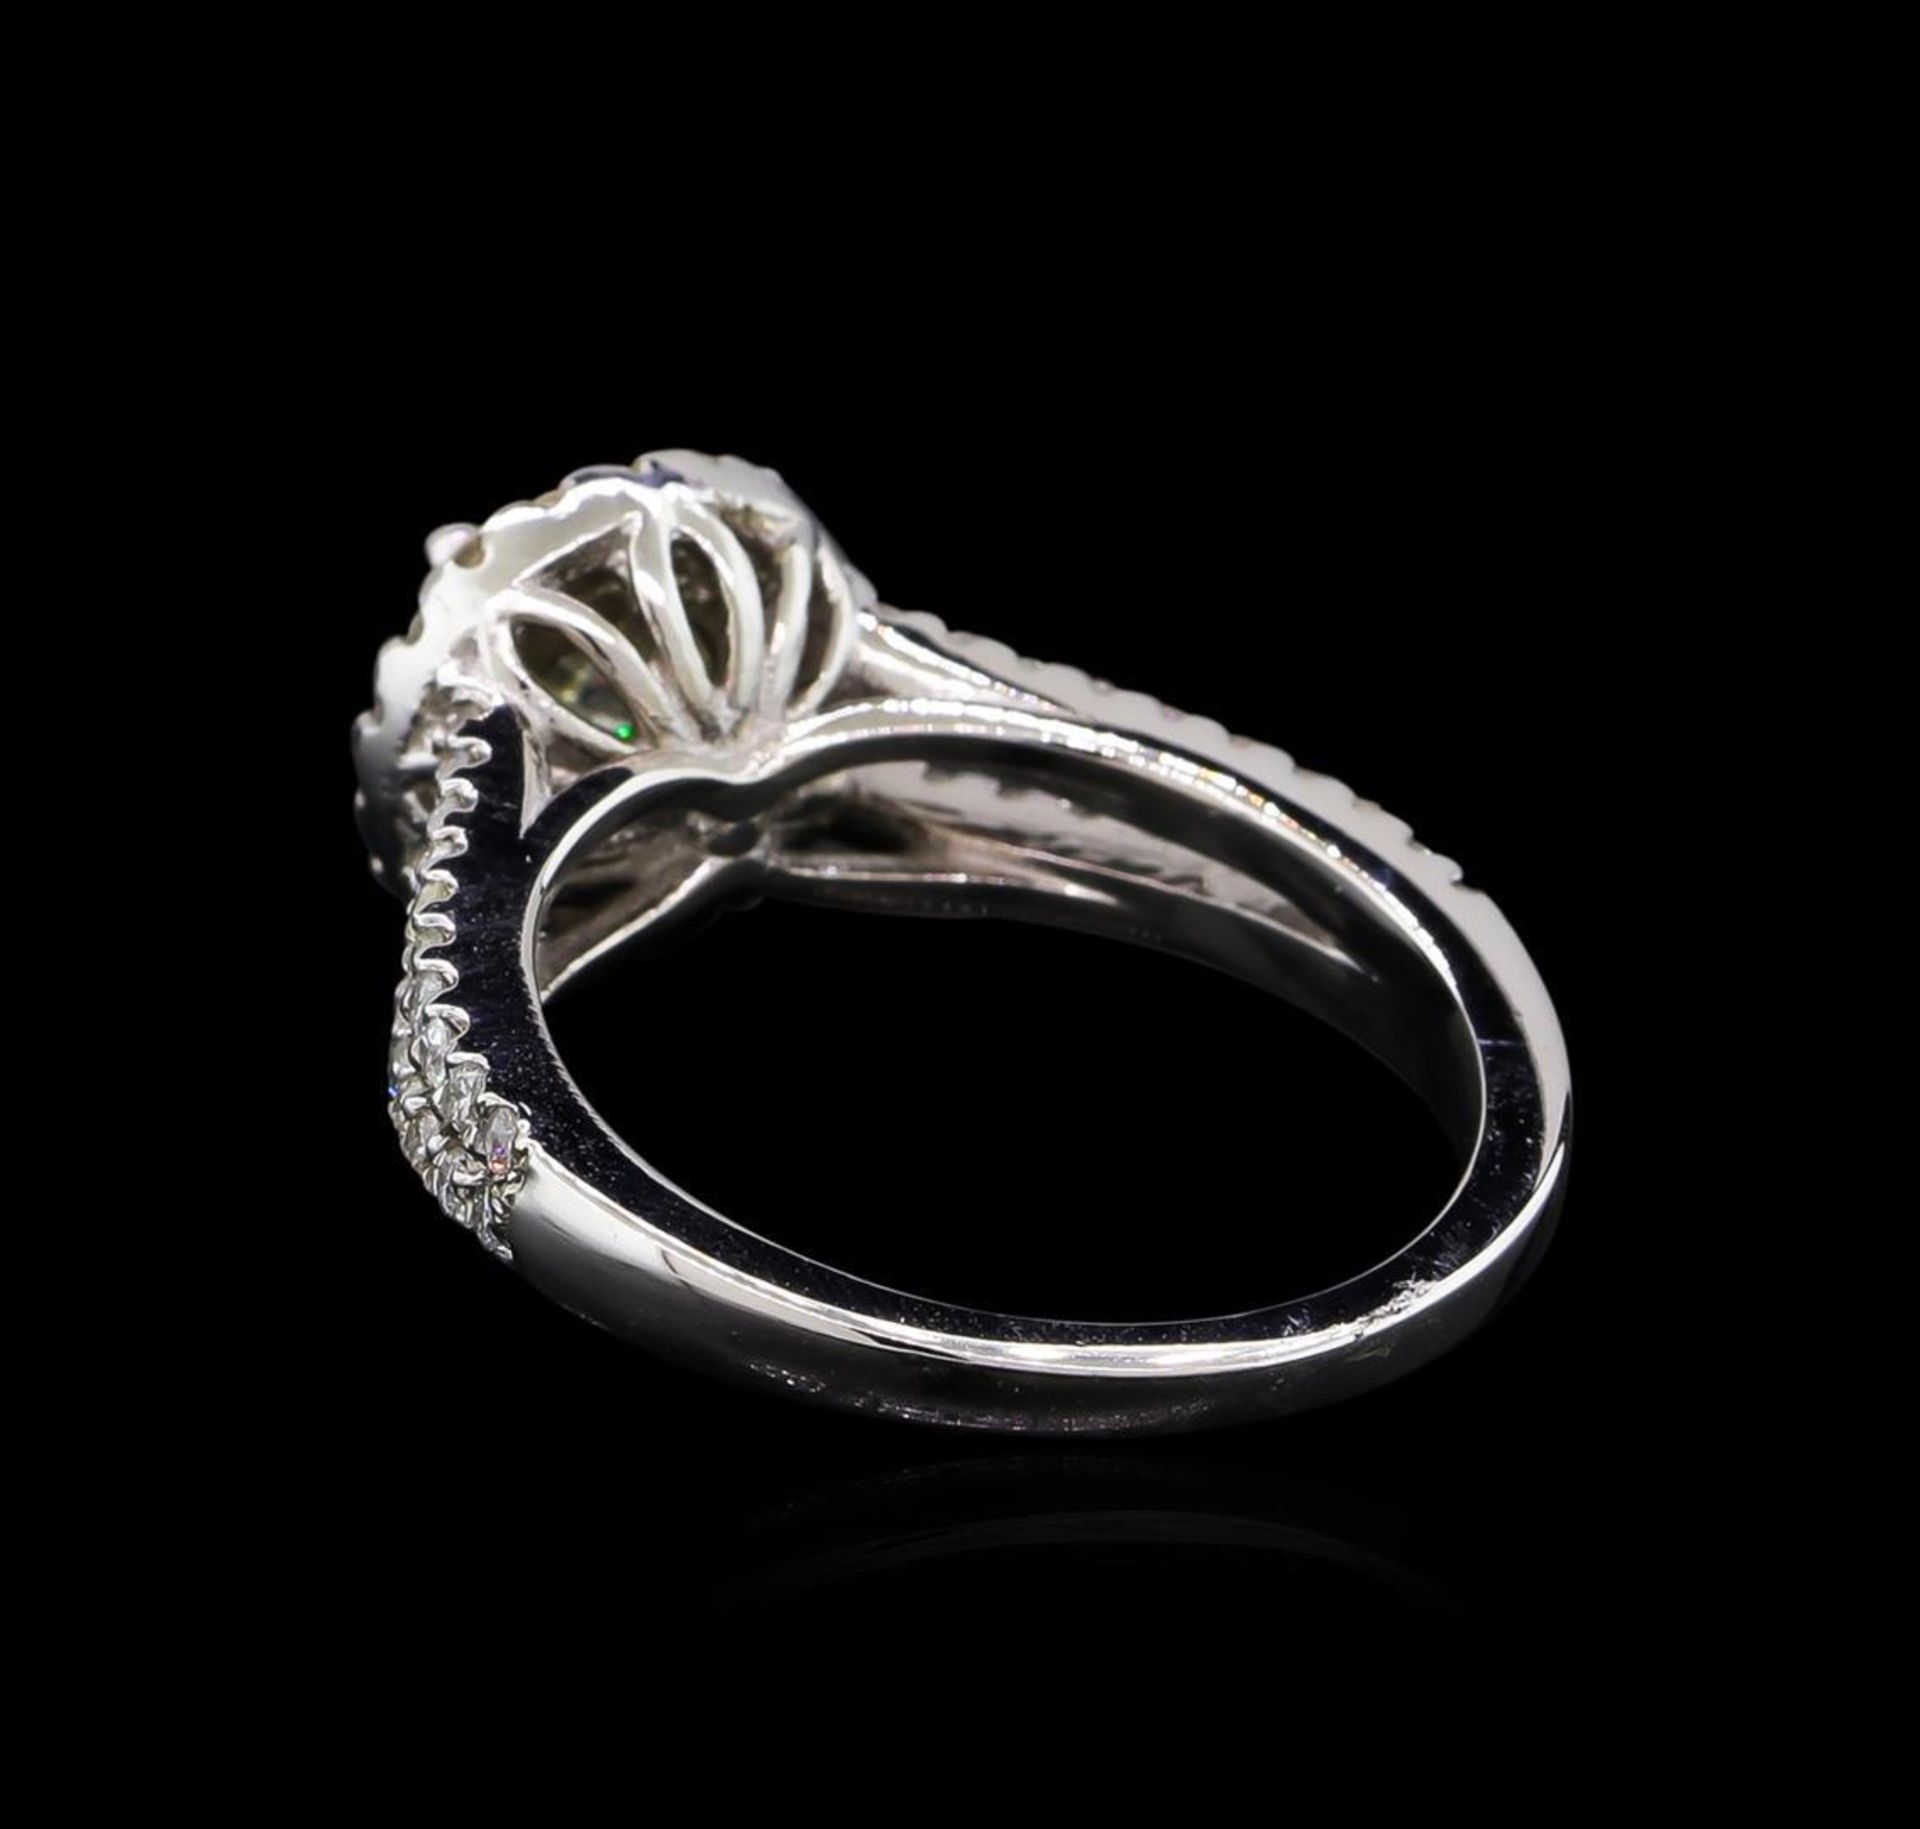 1.18 ctw Diamond Ring - 14KT White Gold - Image 3 of 5